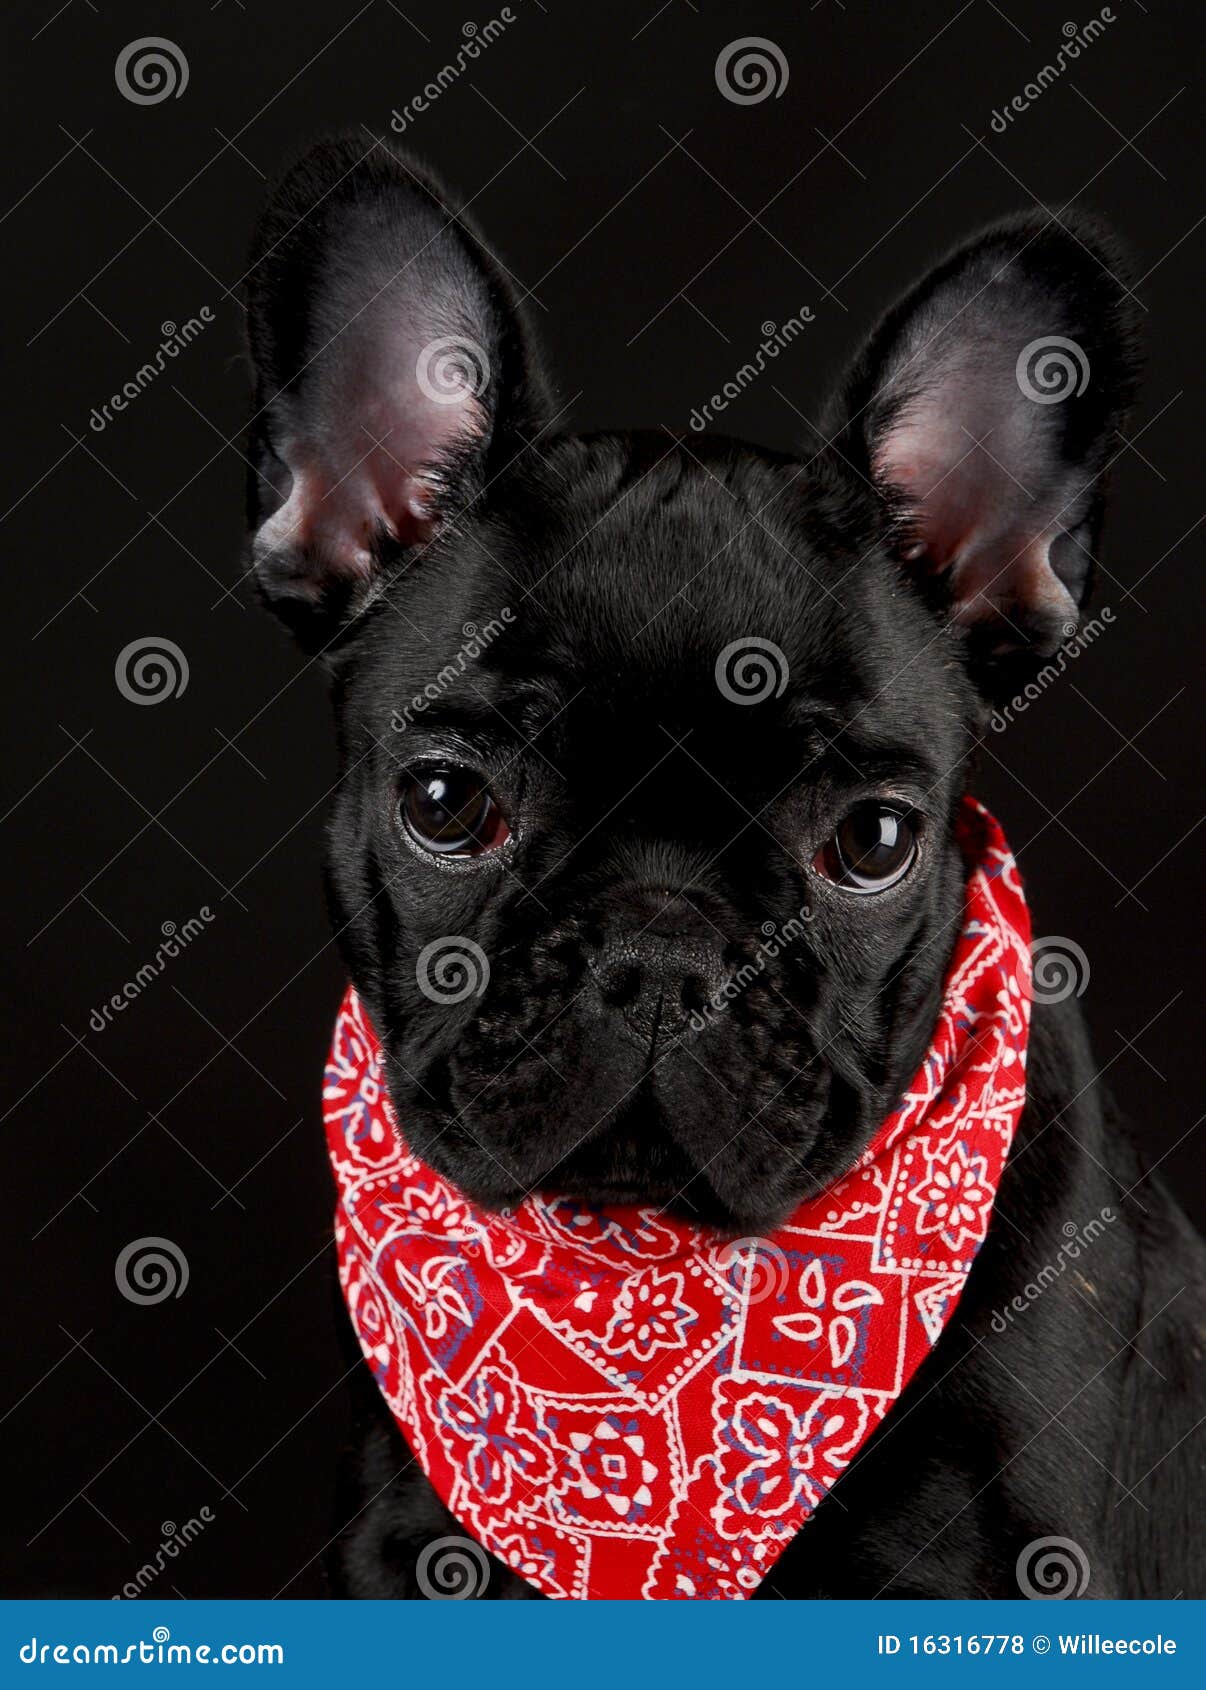 dog wearing red bandanna